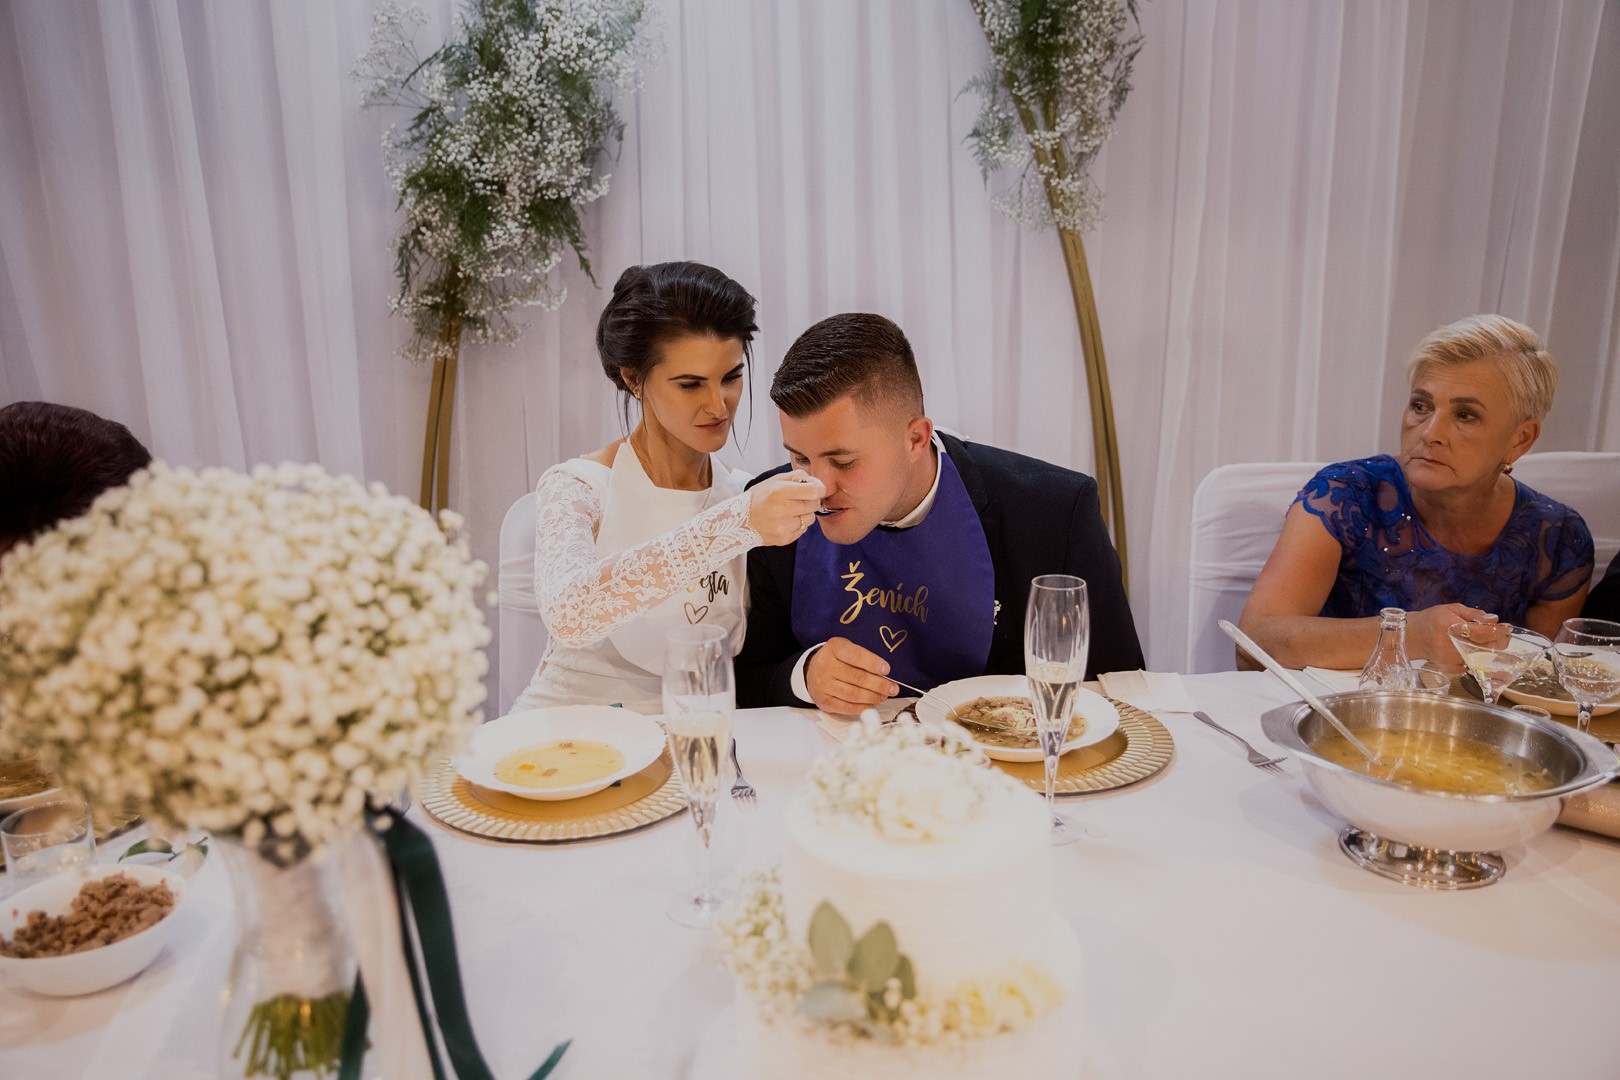 Photo from the wedding of Deniska and Tomáš - 0523.jpg